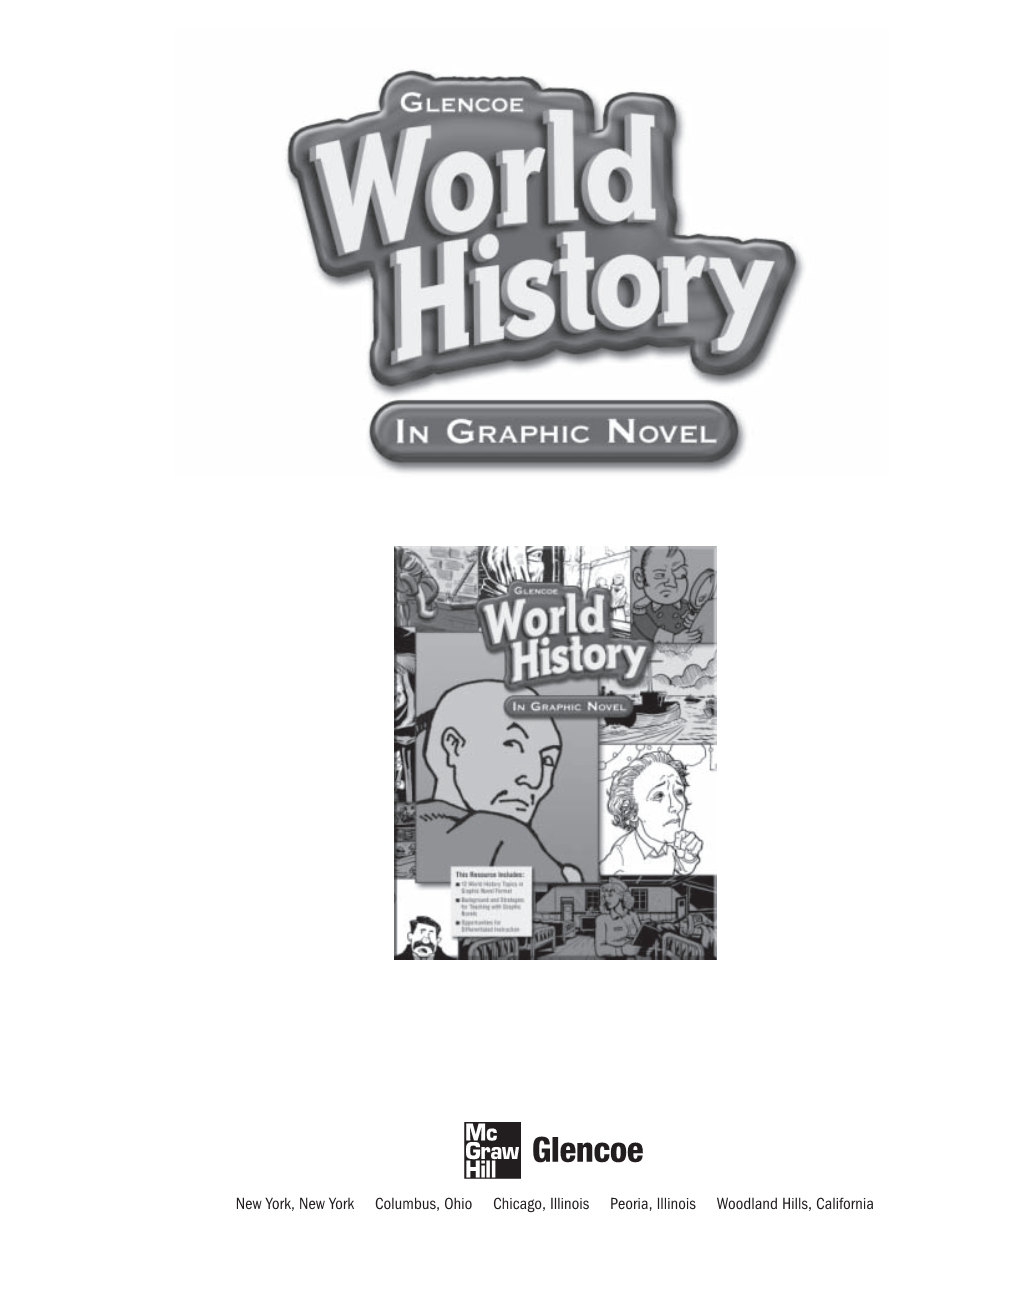 Glencoe World History in Graphic Novel